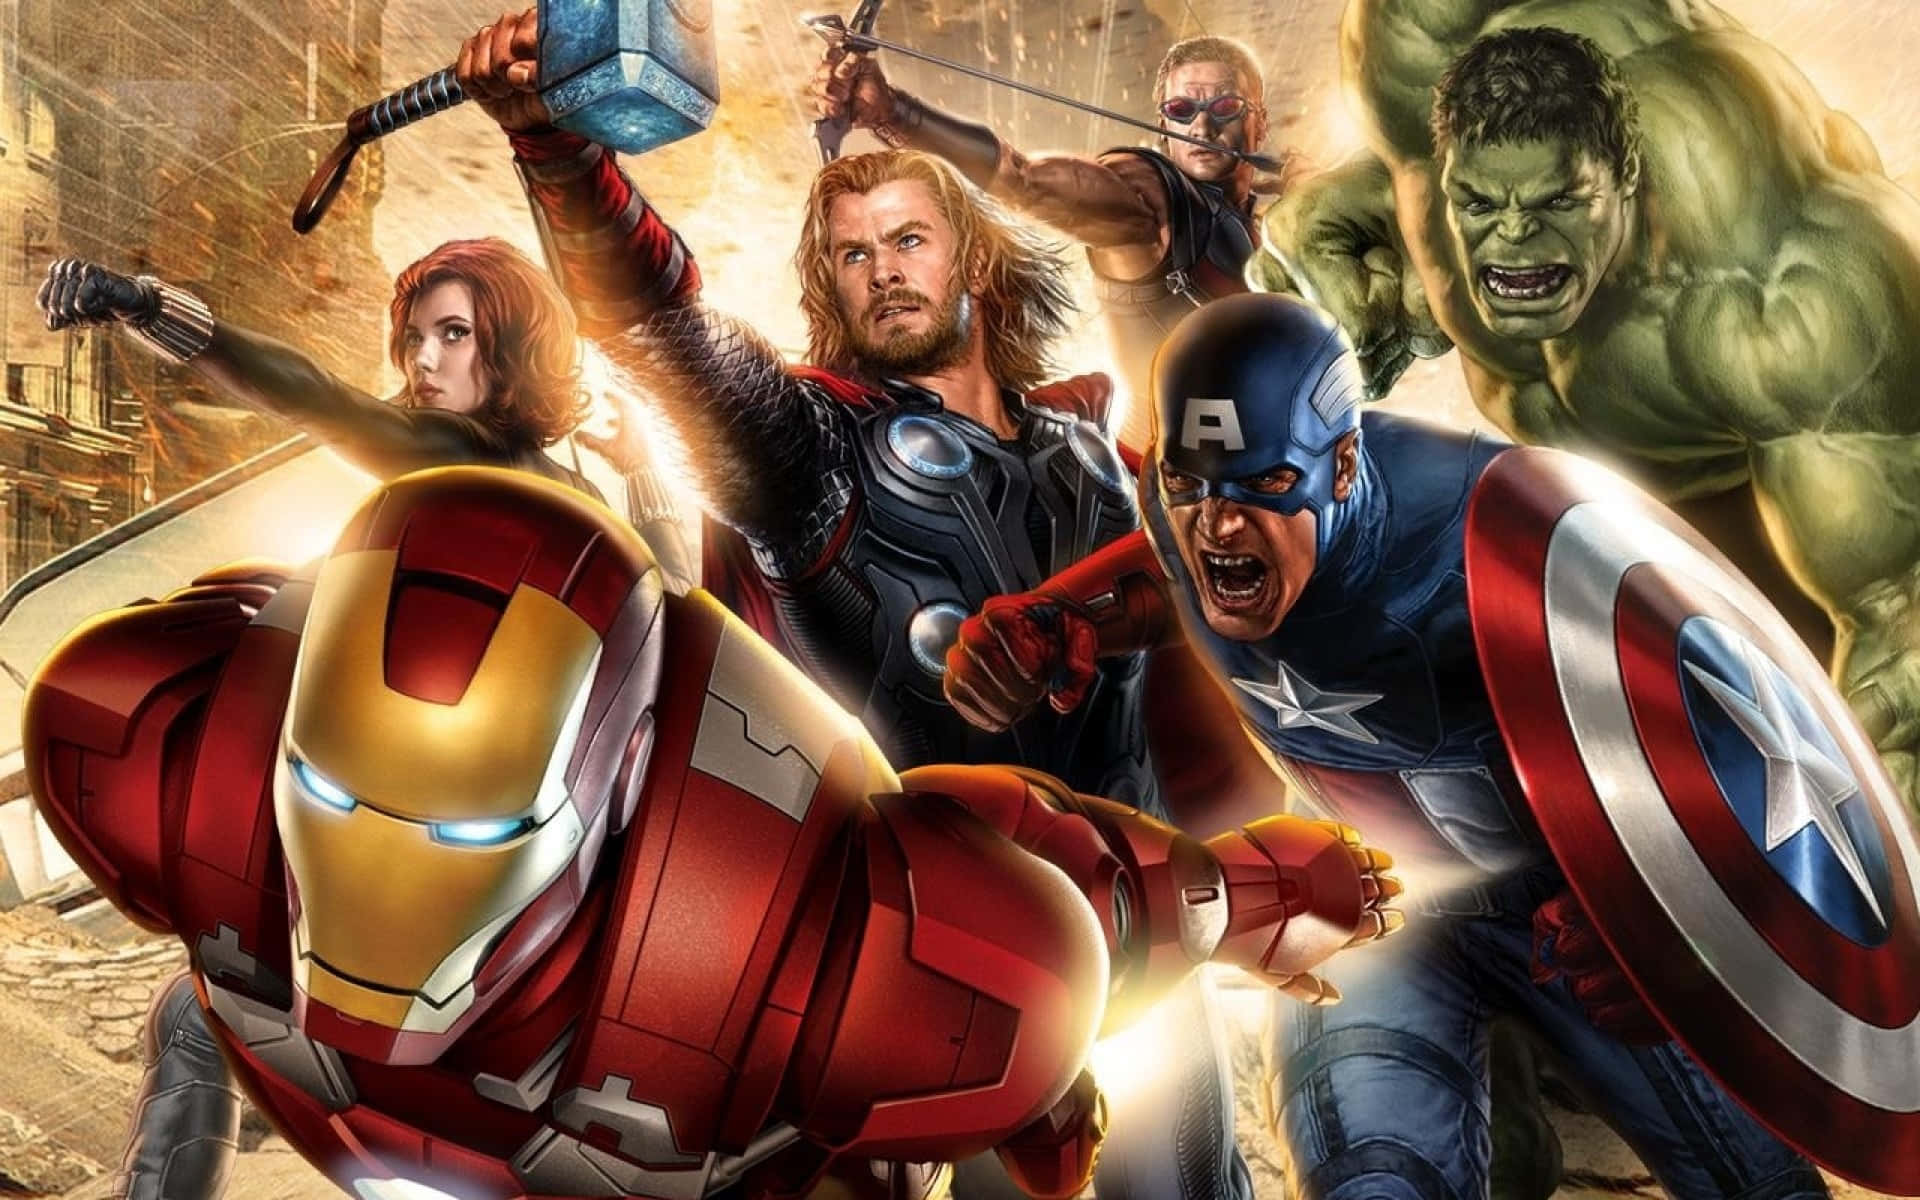 Vær en del af Avengers verden med dette filmplakat med Avengers karakterer. Wallpaper